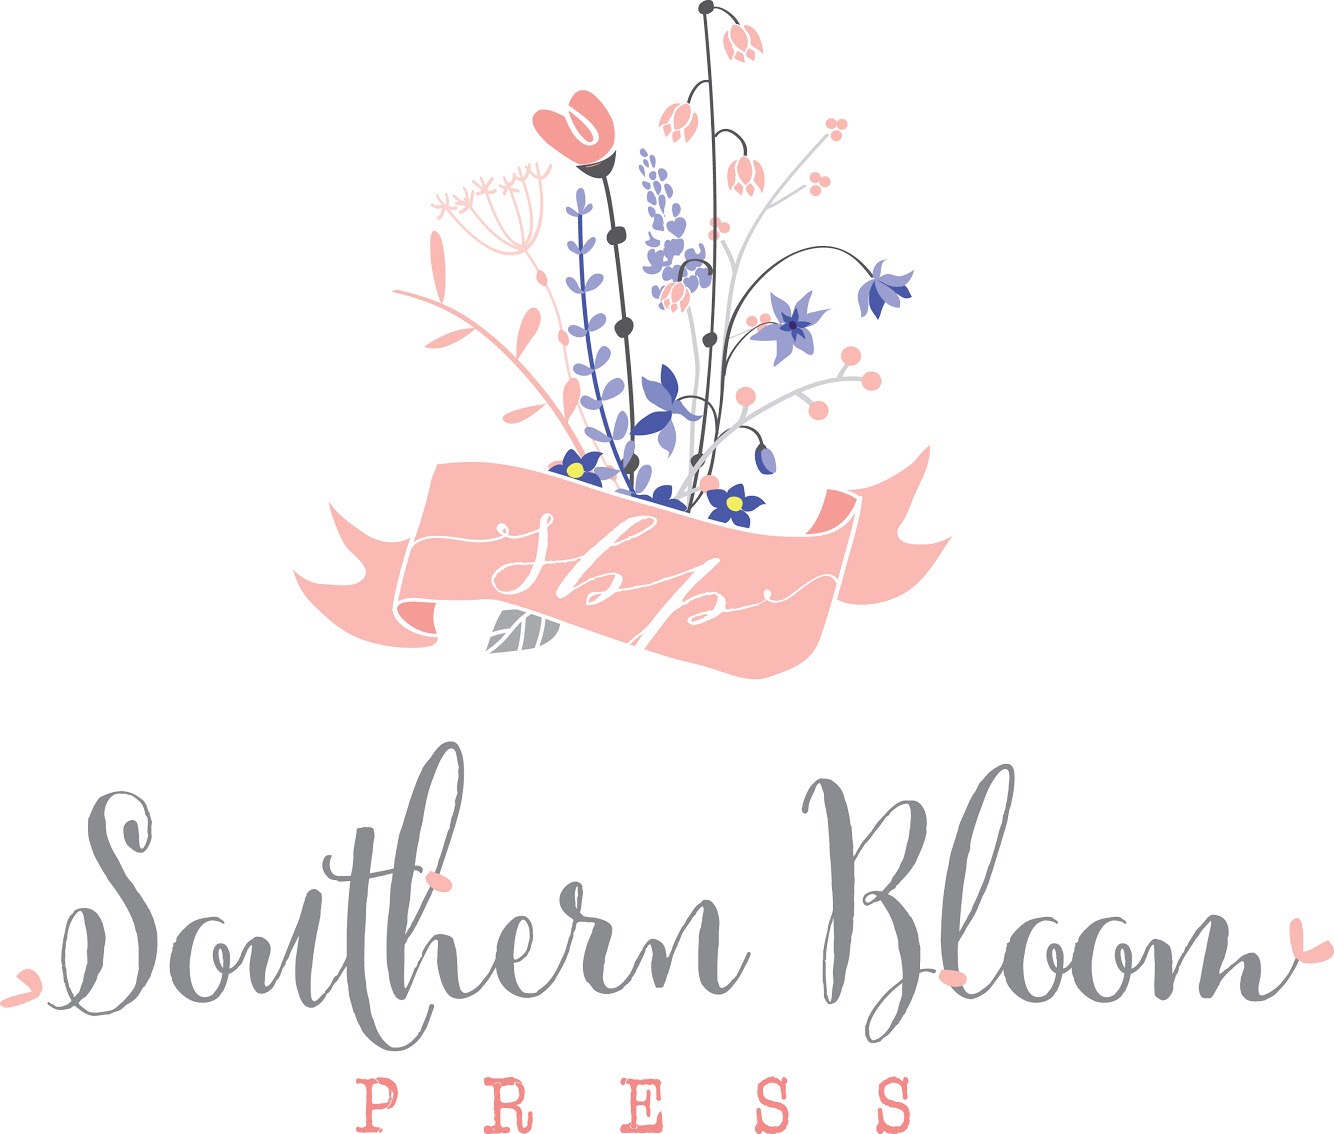 Southern Bloom Press